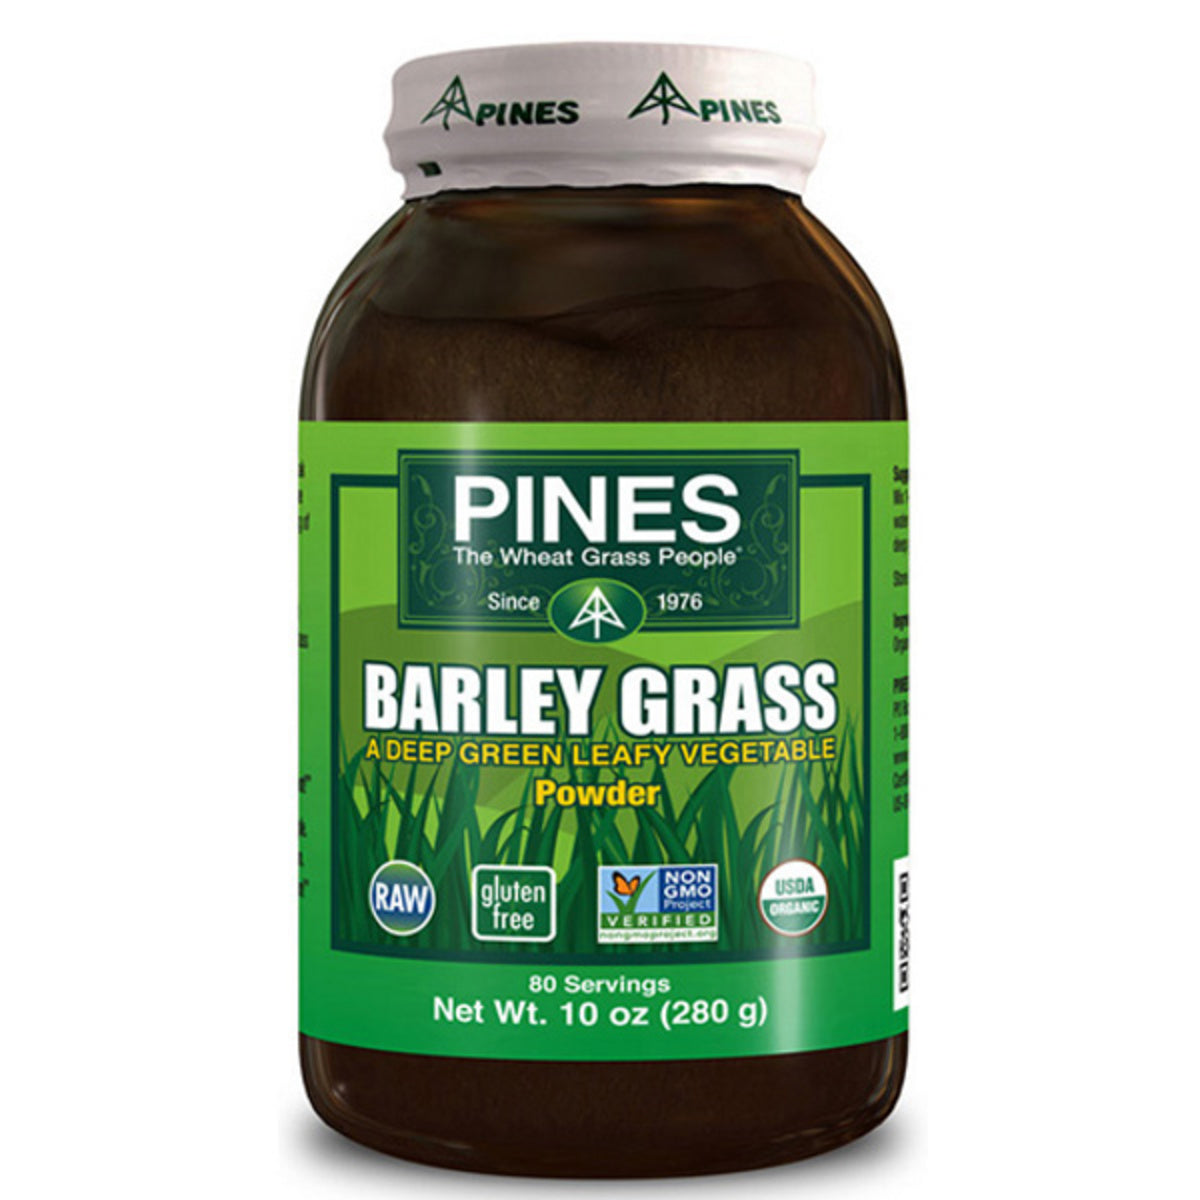 Primary image of Barley Grass Powder